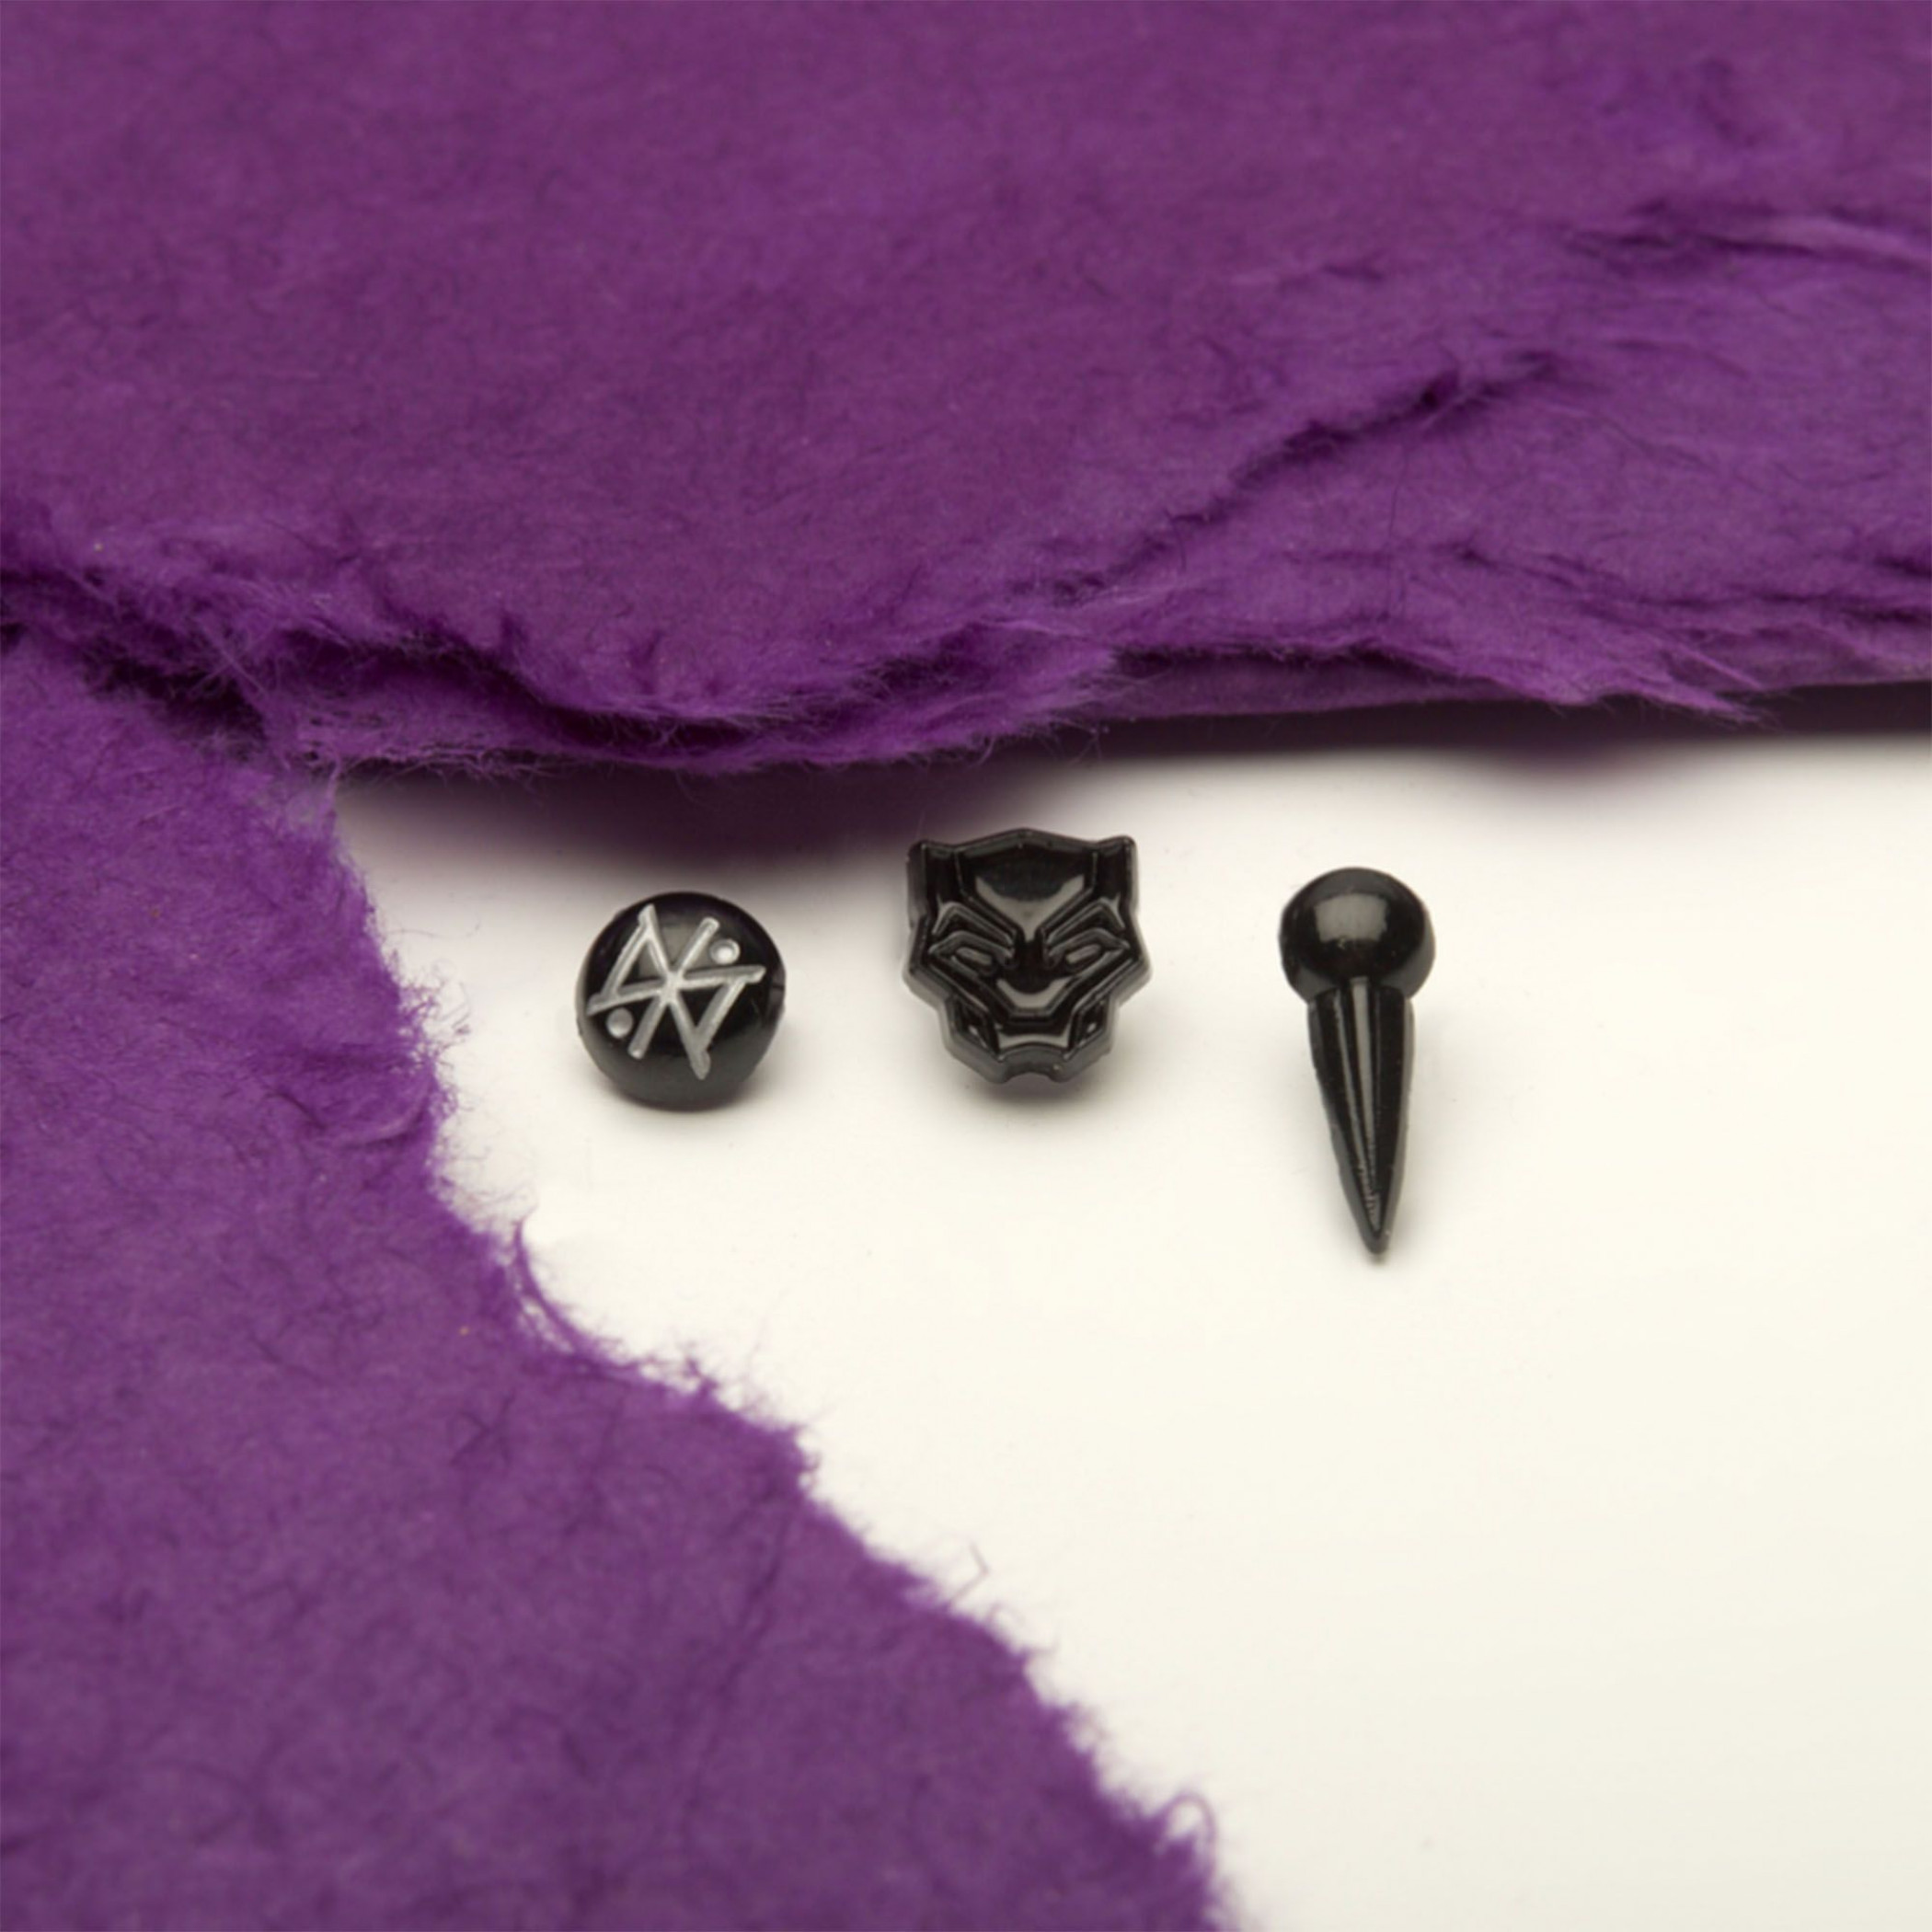 Black Panther Symbols 3-Pair Earrings Set